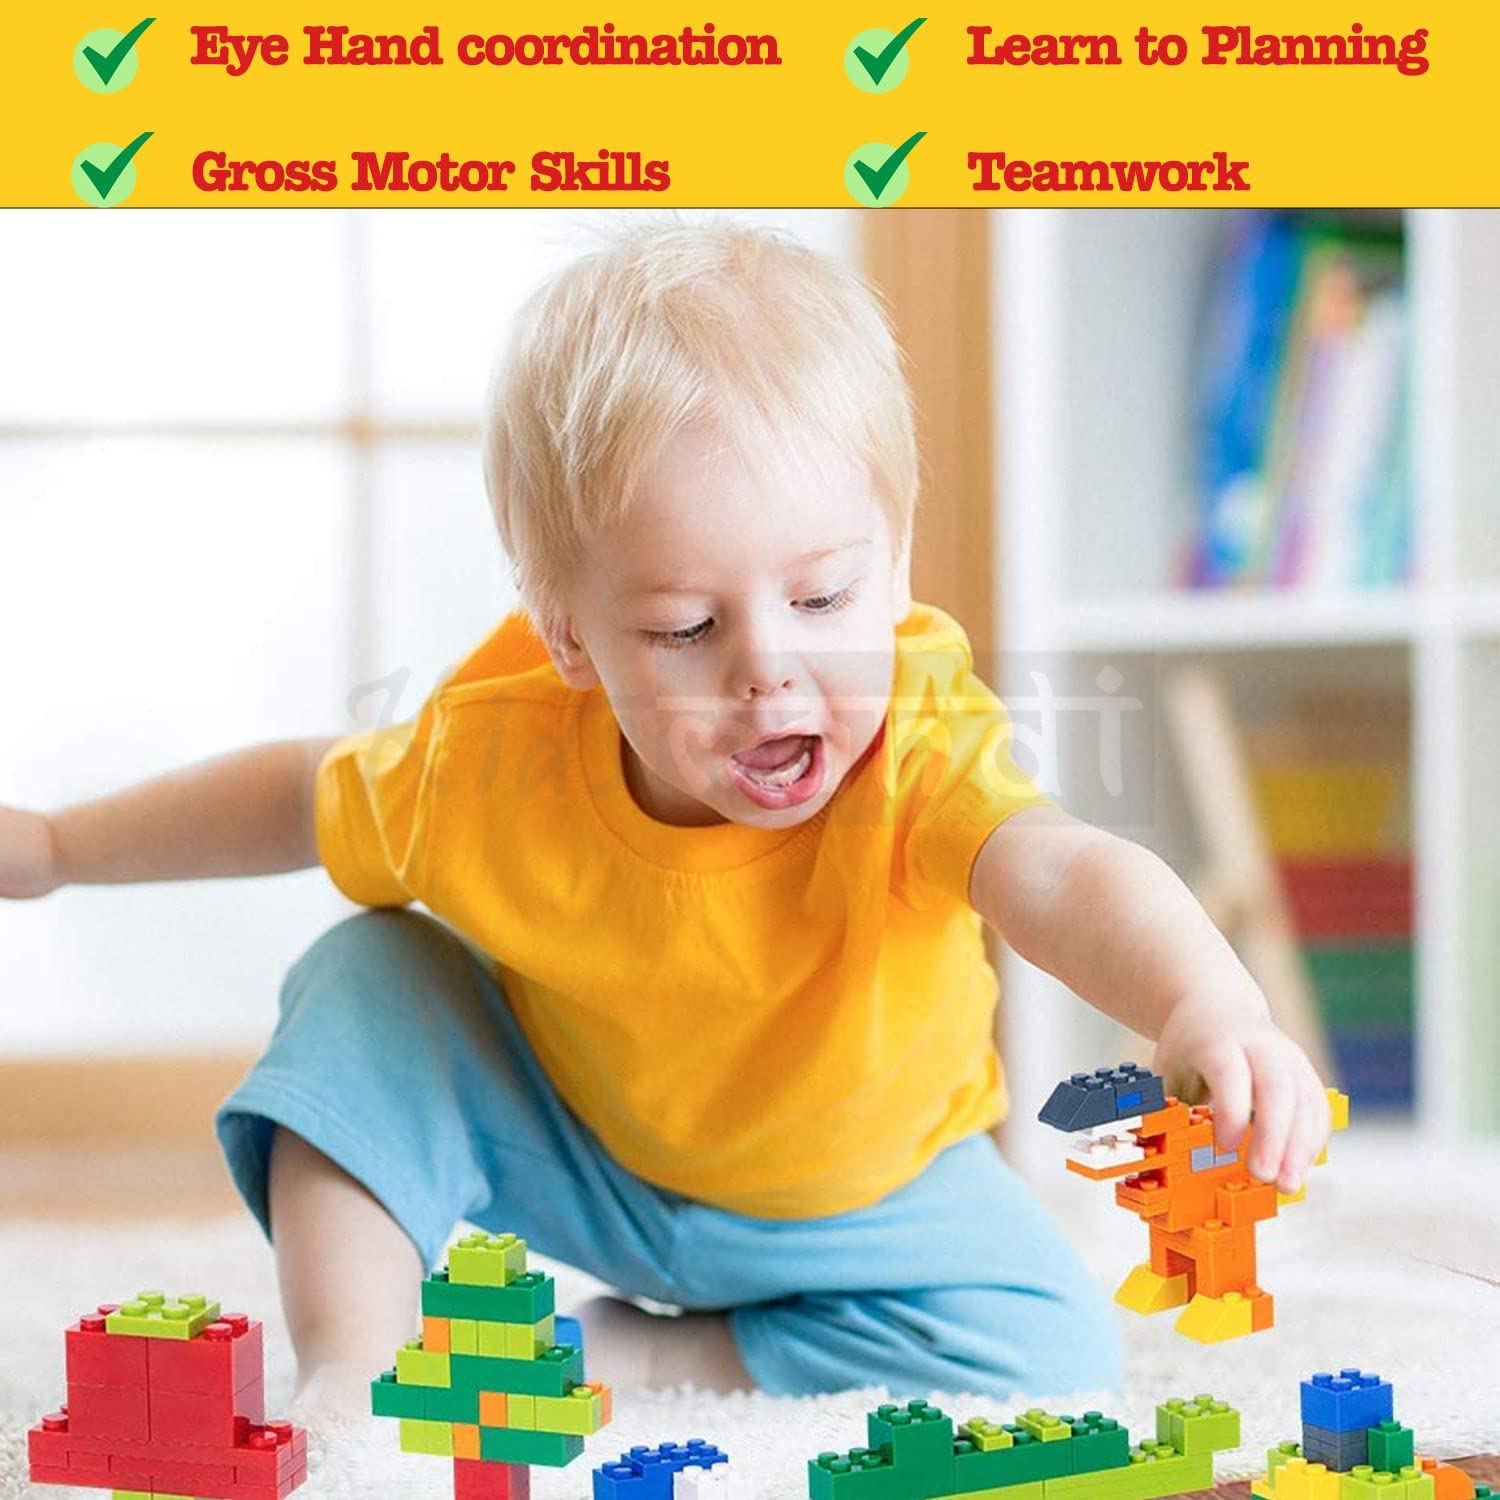 Kids Mandi blocks game constructive play educational toy set for kids.